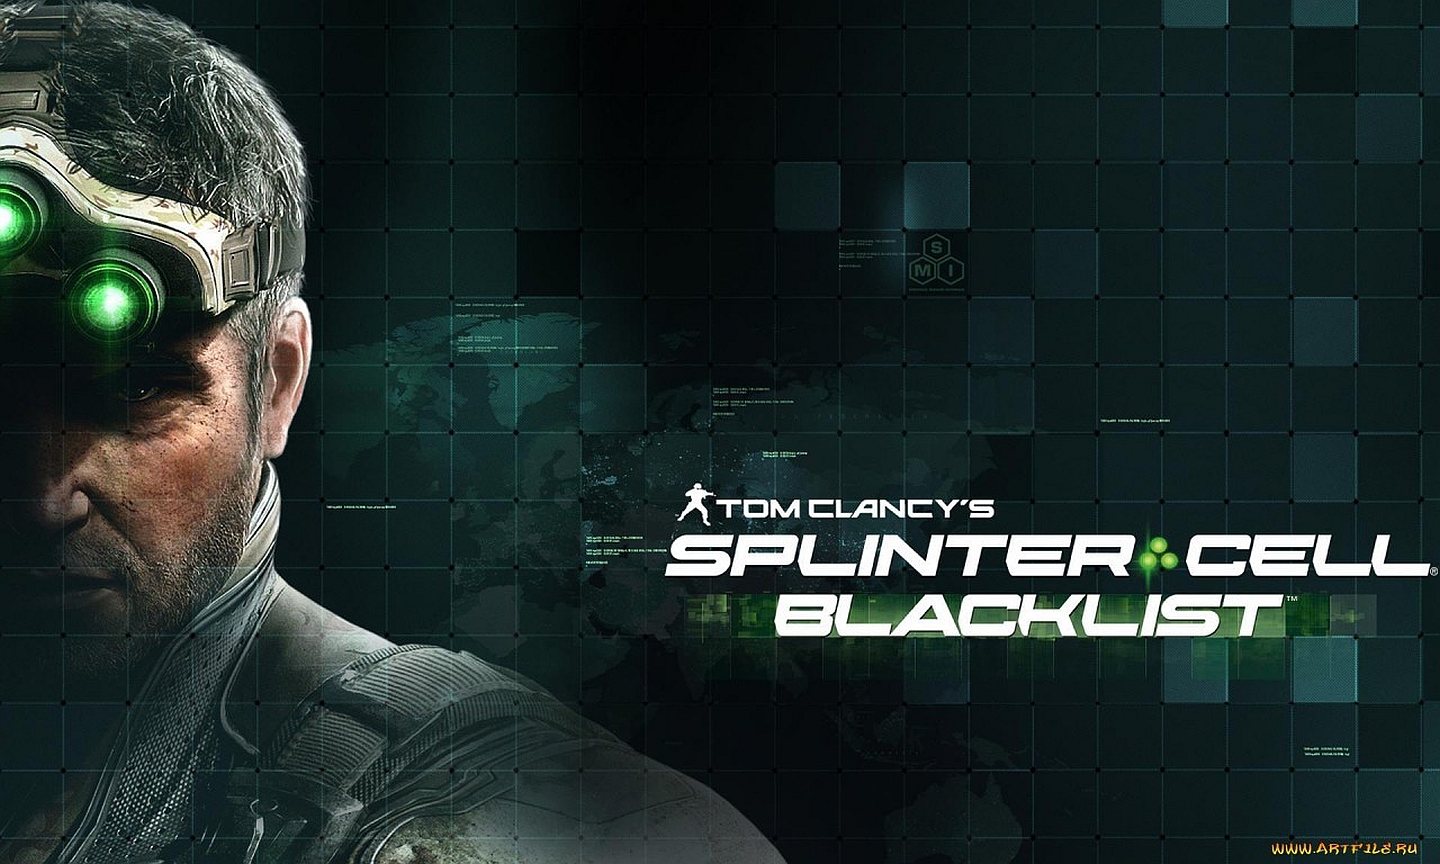 tom clancy's splinter cell: blacklist, video game, sam fisher, tom clancy's